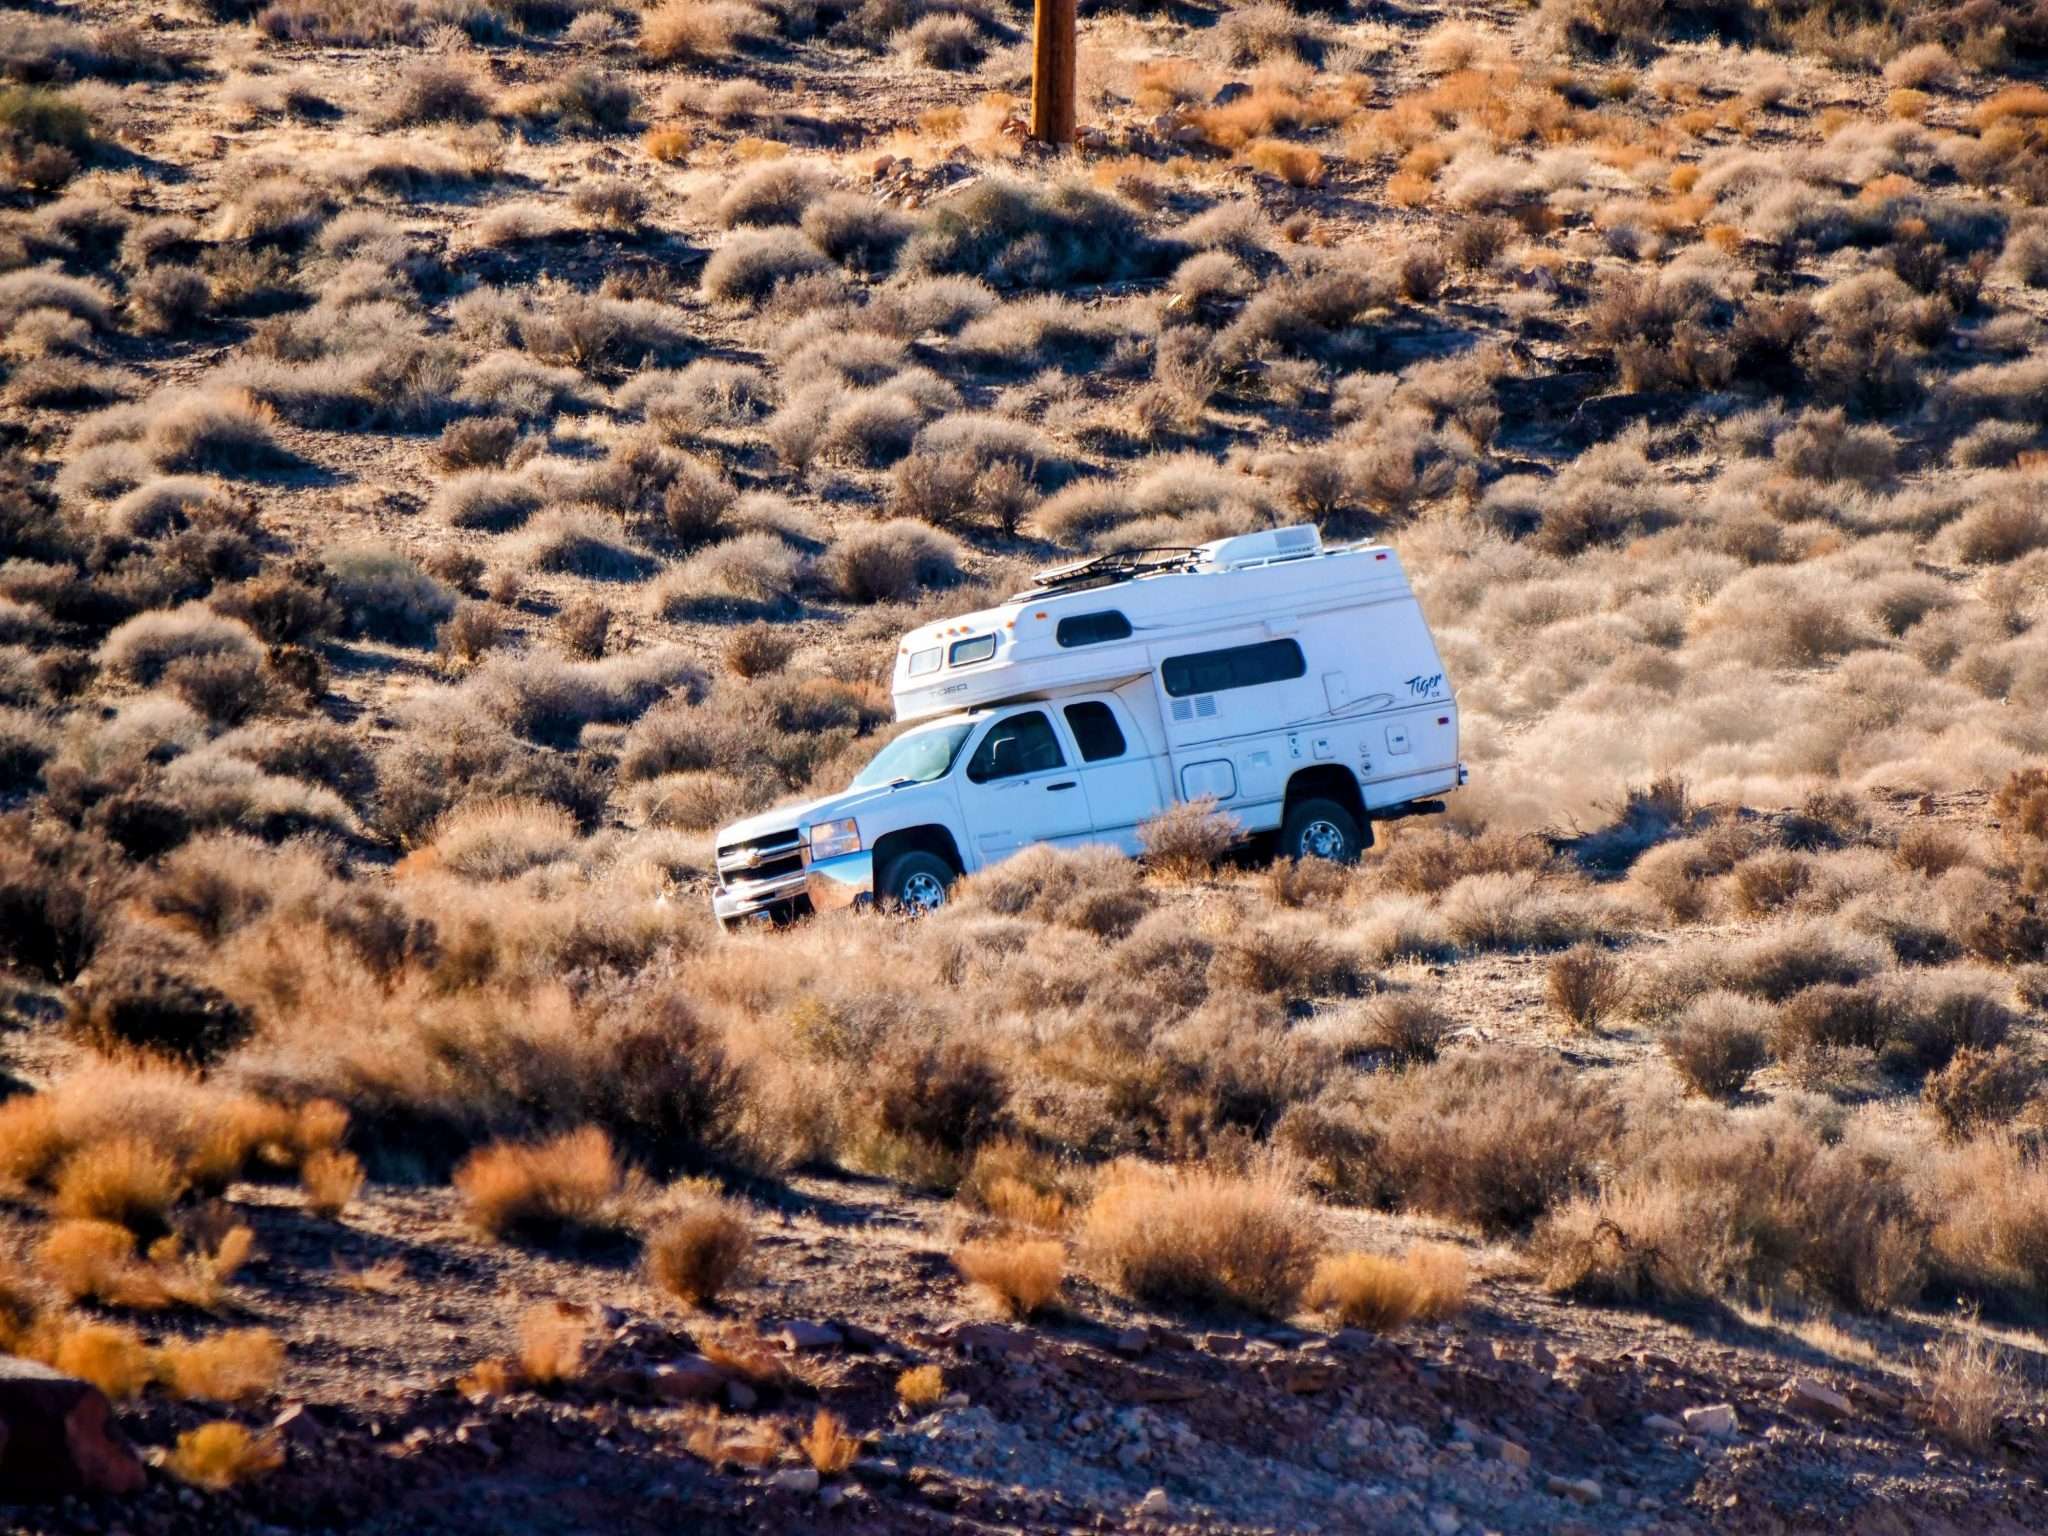 provan tiger vehicle off-roading through desert